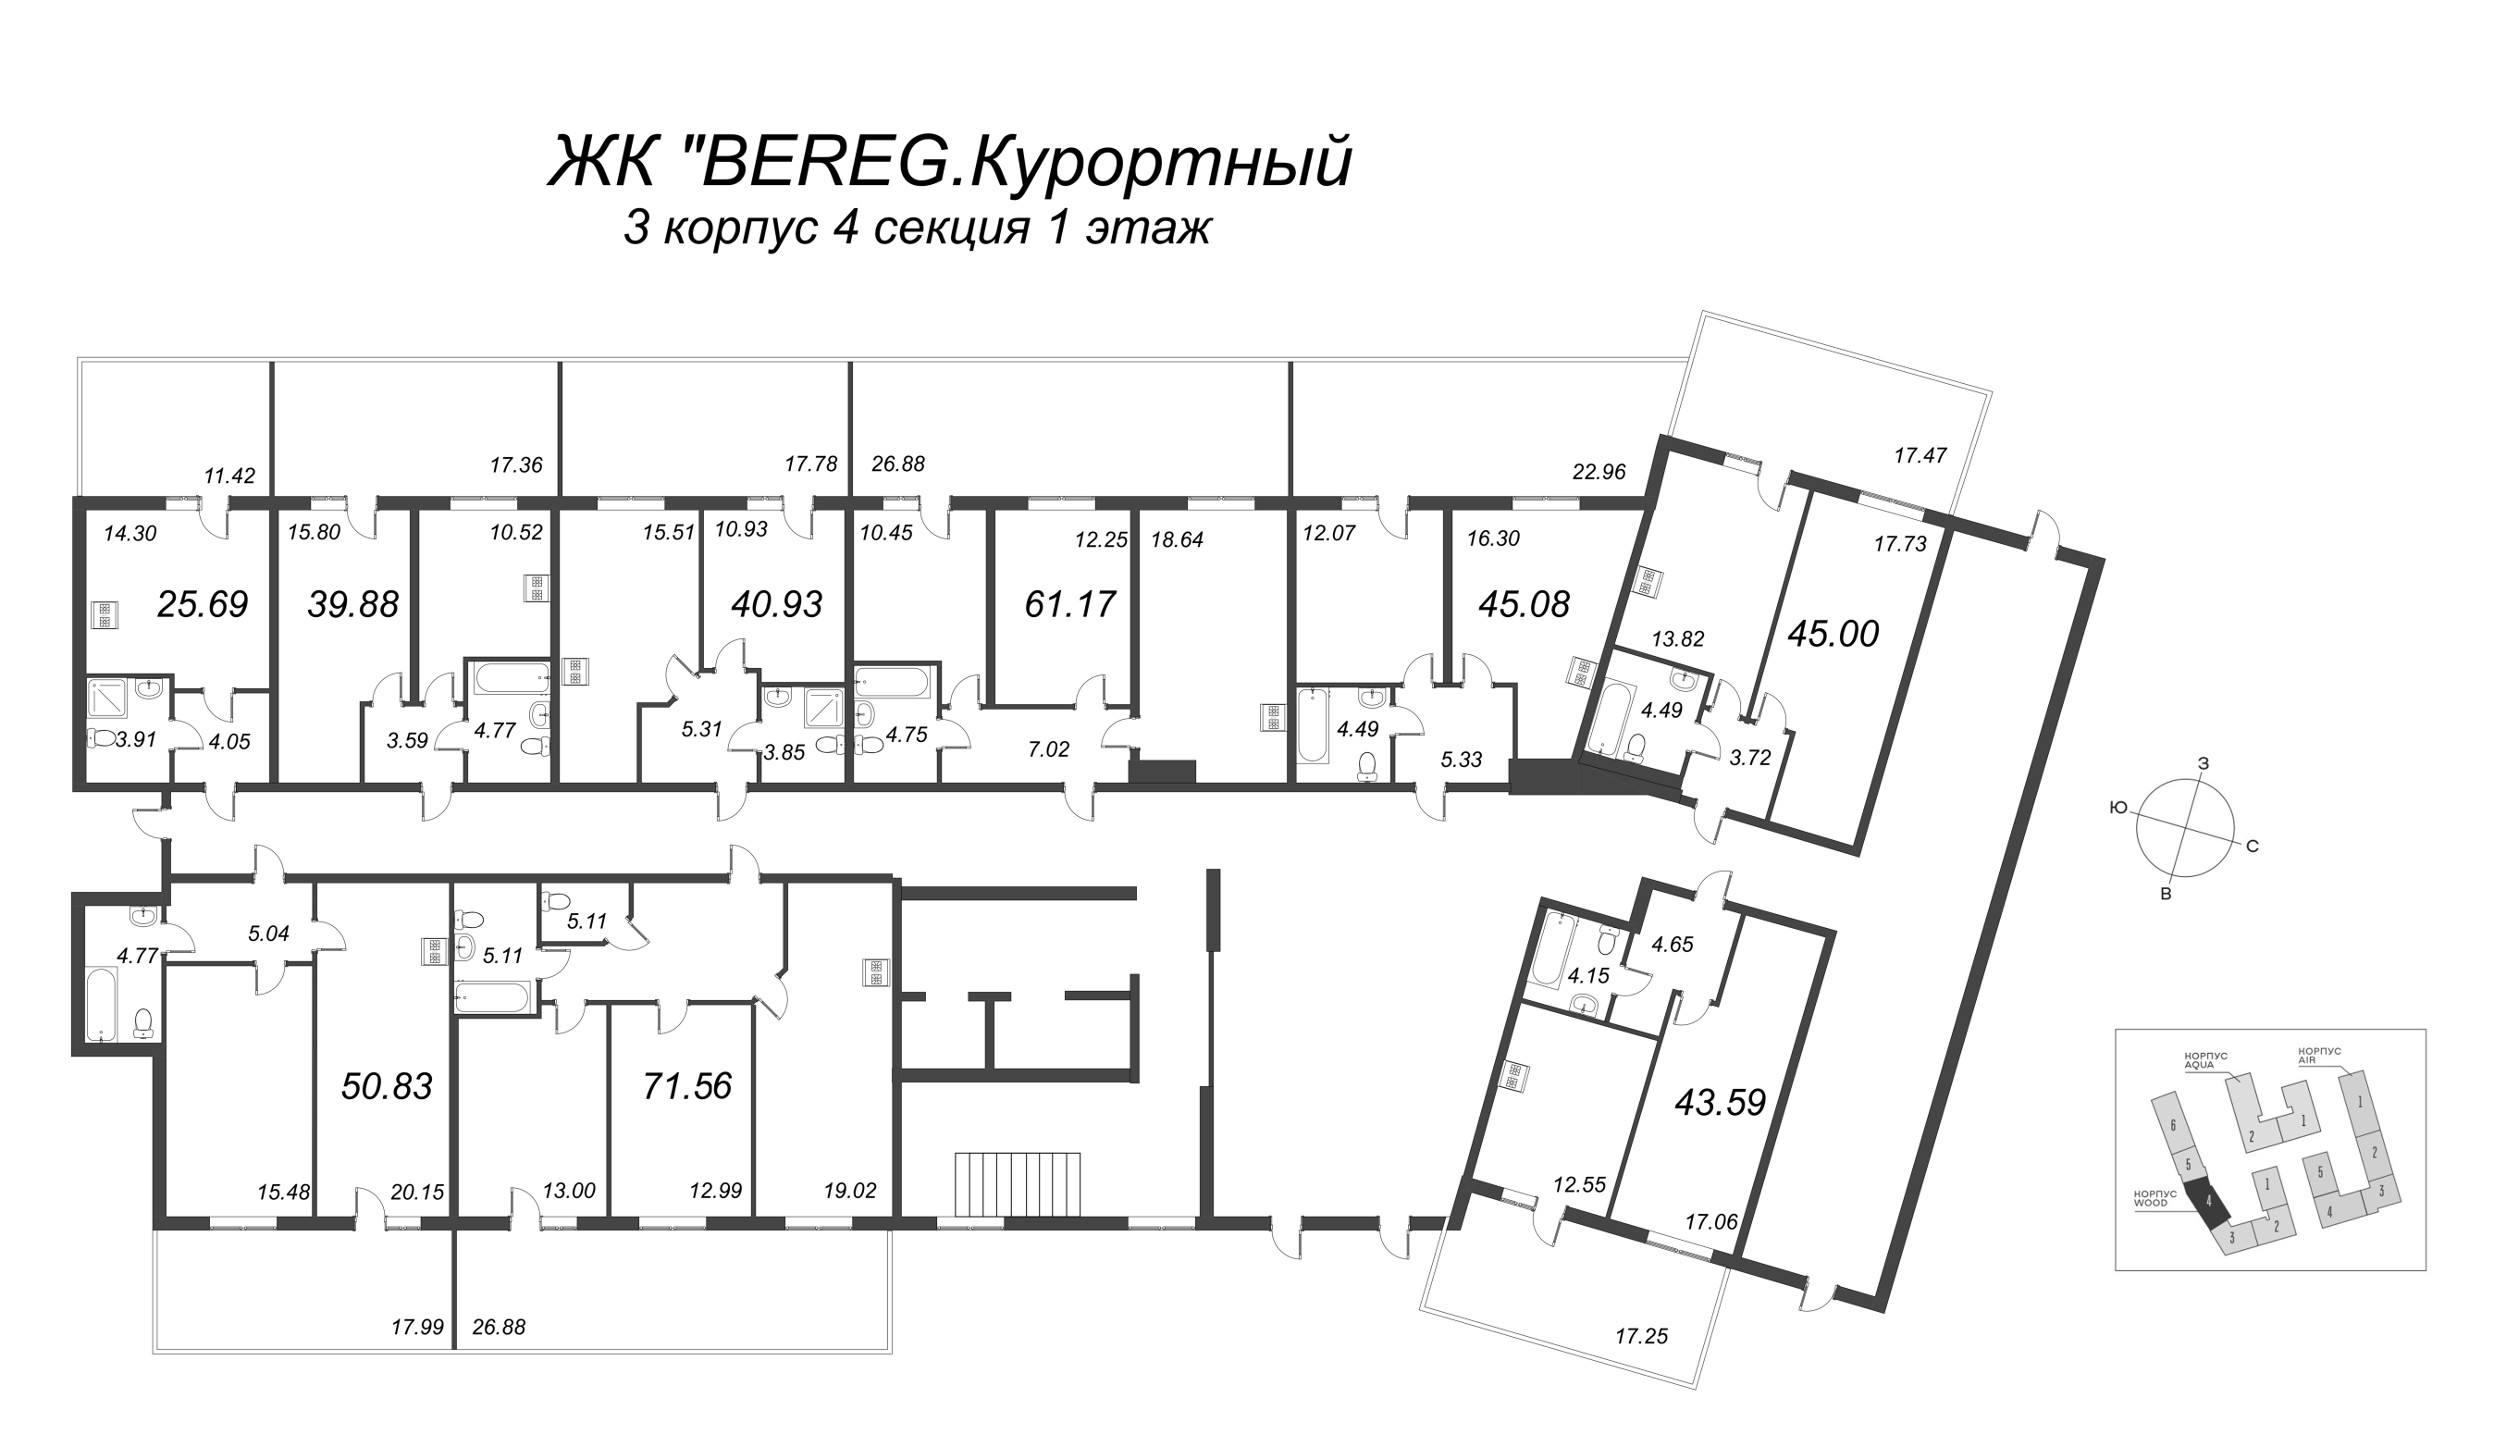 2-комнатная (Евро) квартира, 45.08 м² - планировка этажа